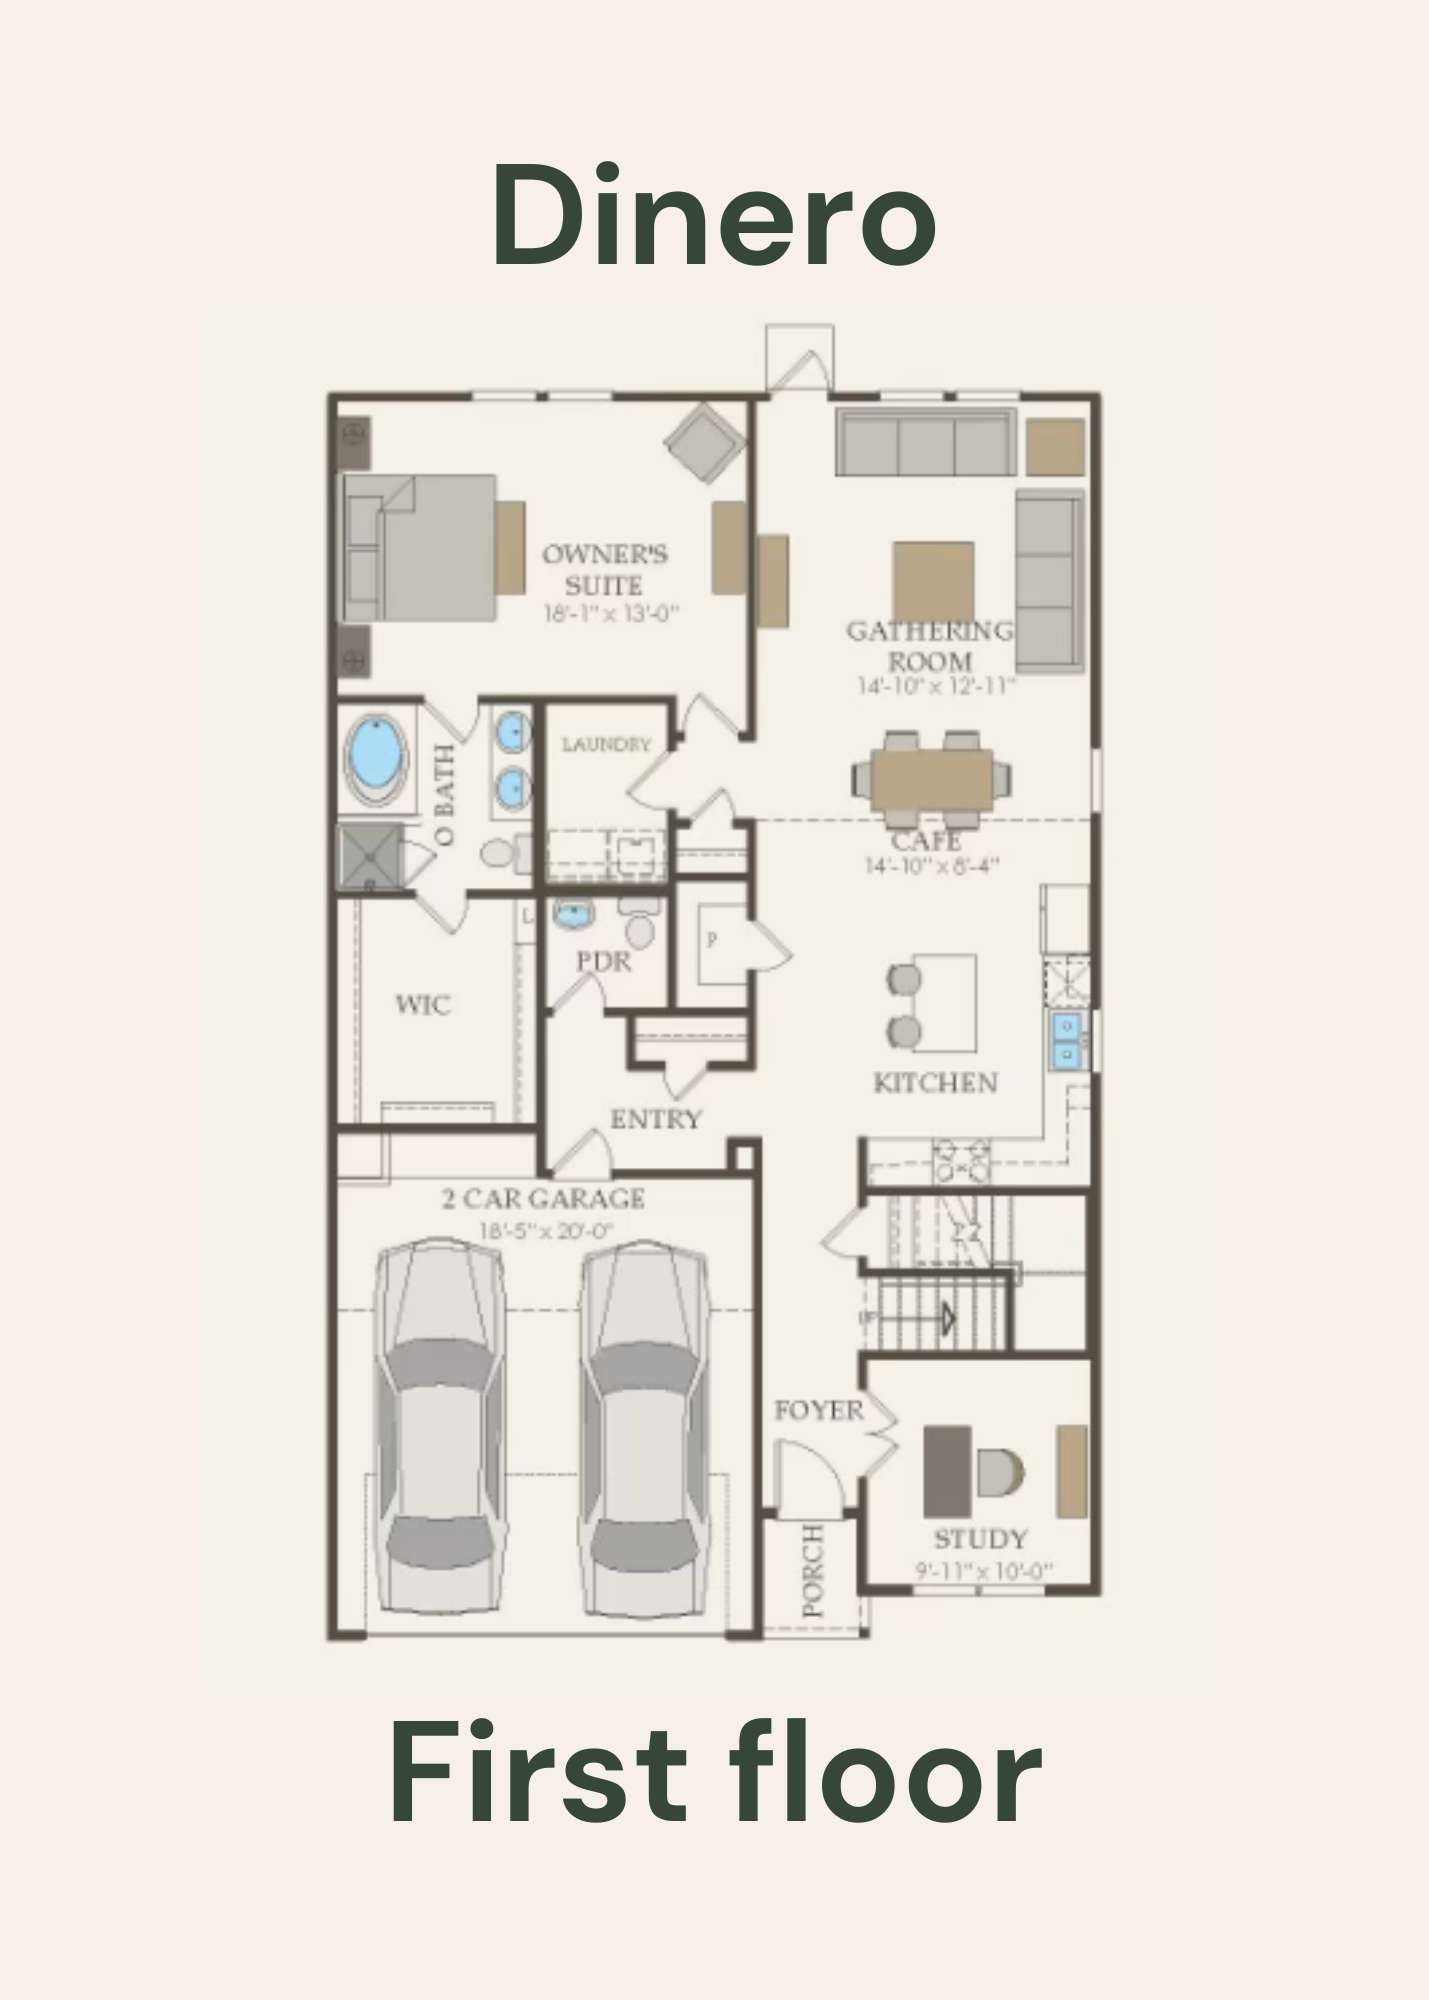 Dinero First Floor - Floor Plan by Centex Homes